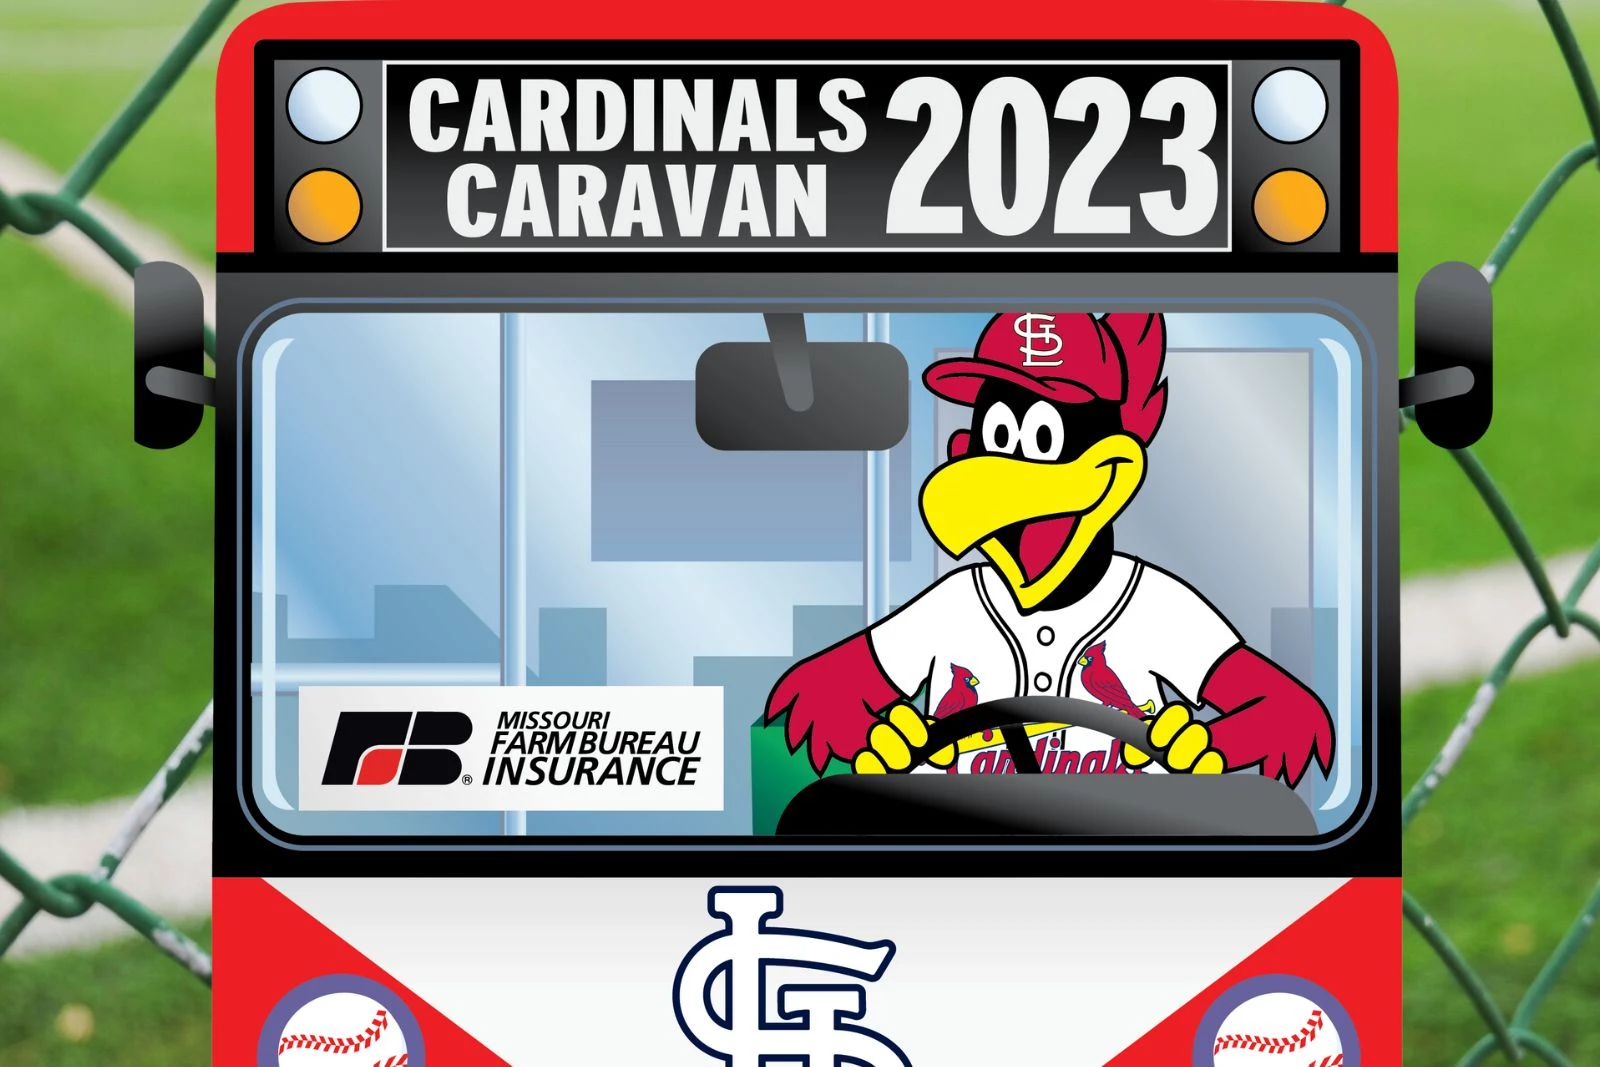 2023 World Baseball Classic - Game-Used Jersey - 3/12/2023 - Jose Altuve  #27 - Venezuela